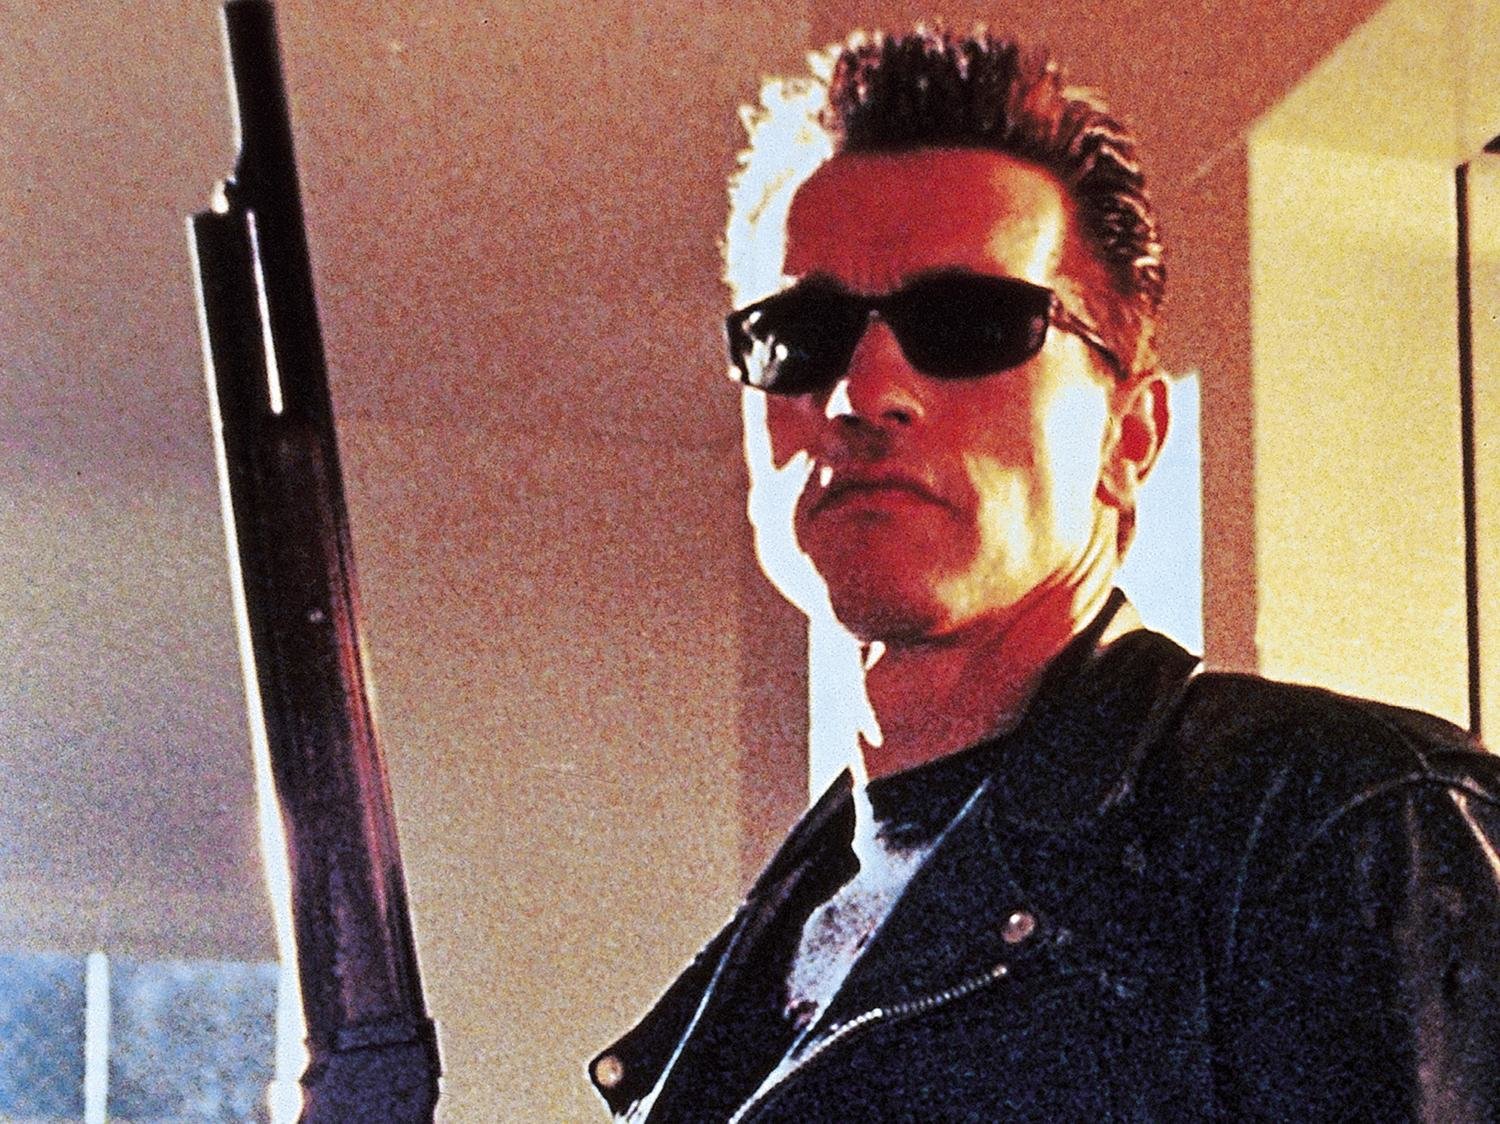 Terminator 2 - Special Edition (2024) (4K Ultra HD) (+ Blu-ray)